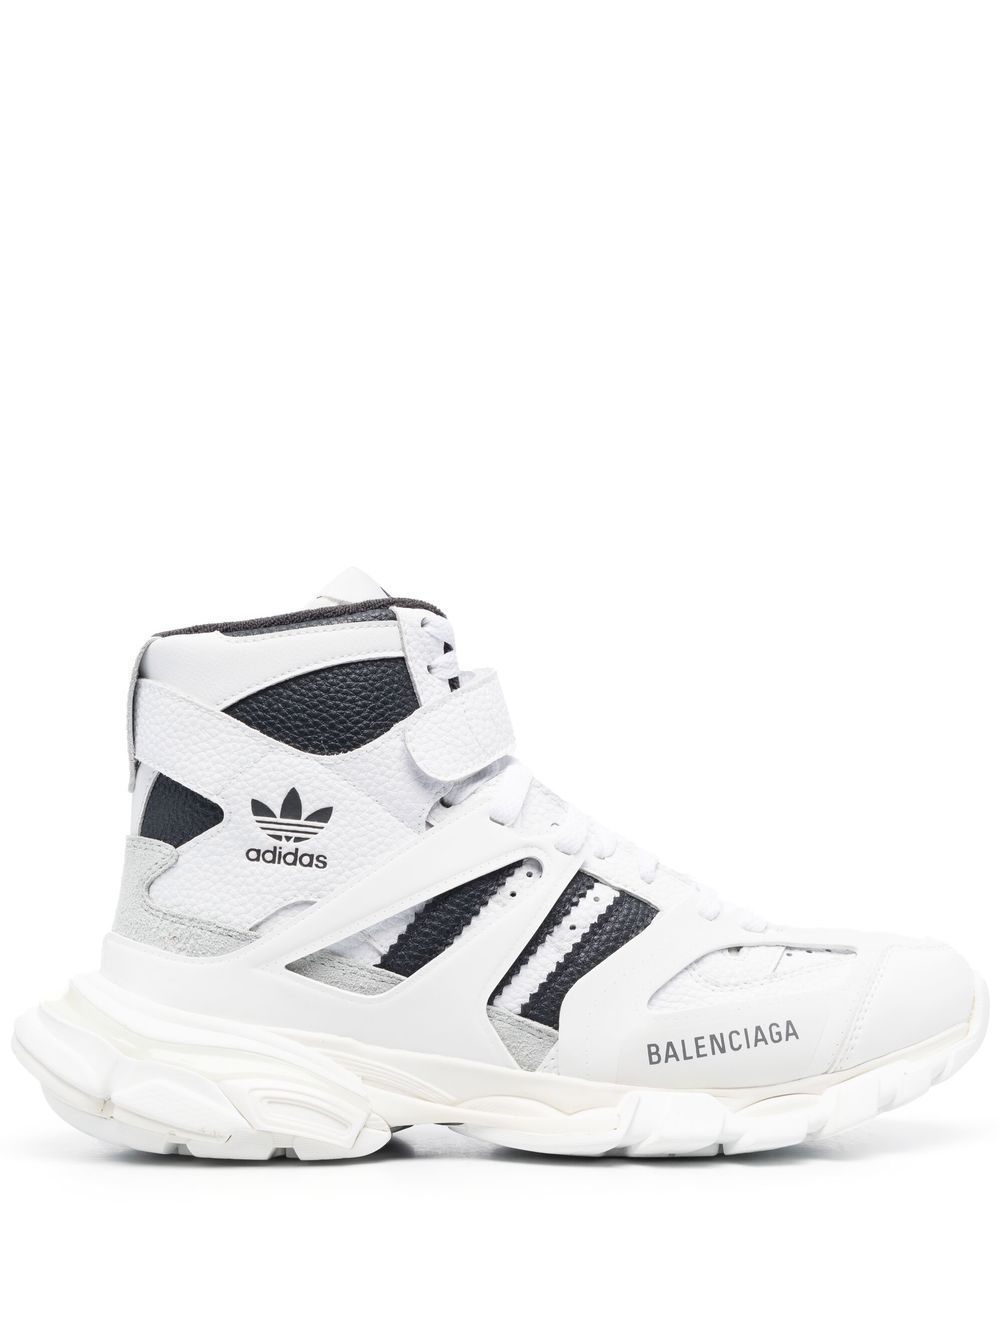 Balenciaga x Adidas Triple S low-top Sneakers - Farfetch